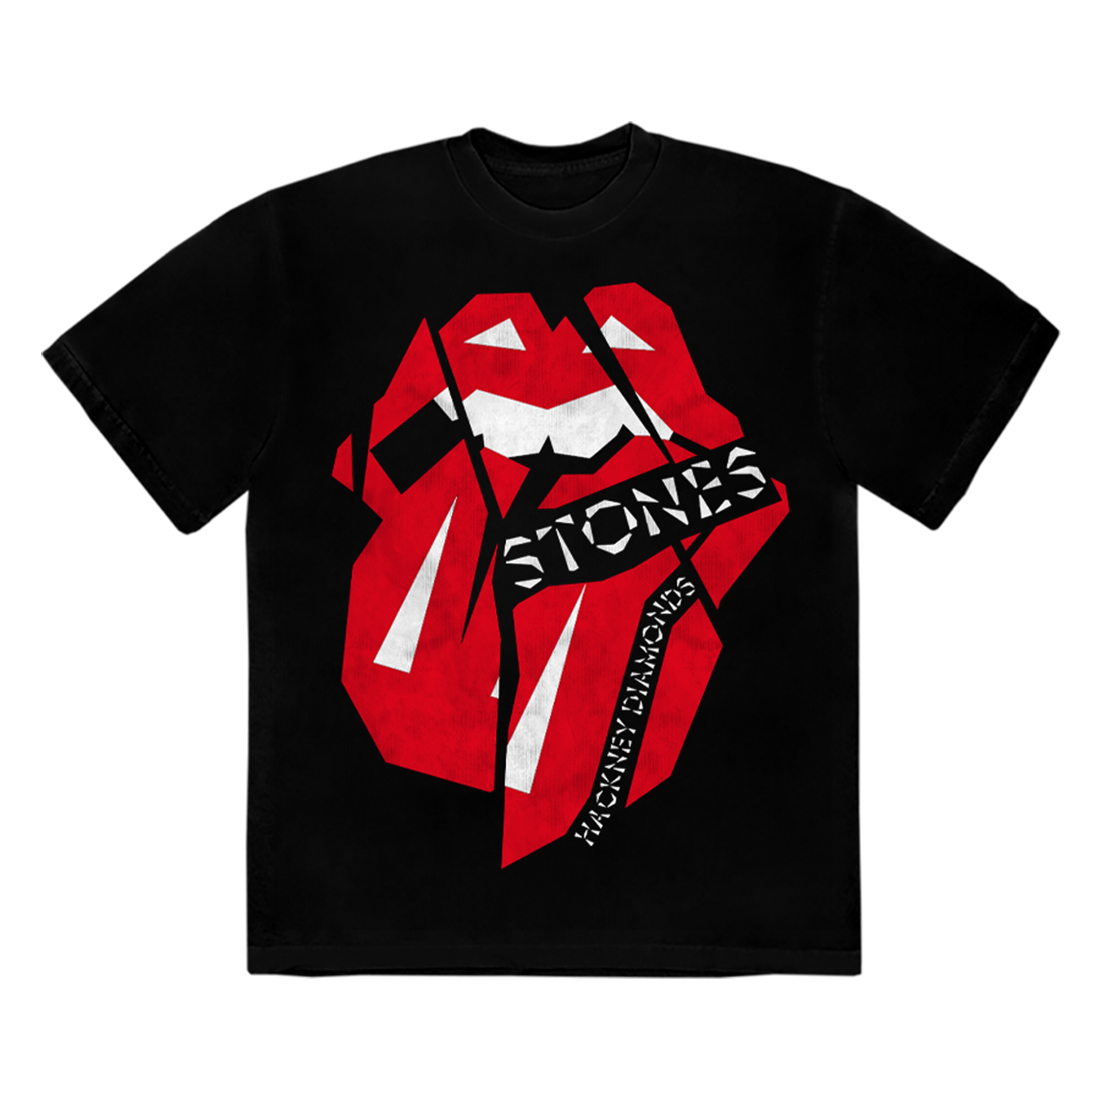 The Rolling Stones - Hackney Diamonds Tracklist T-Shirt